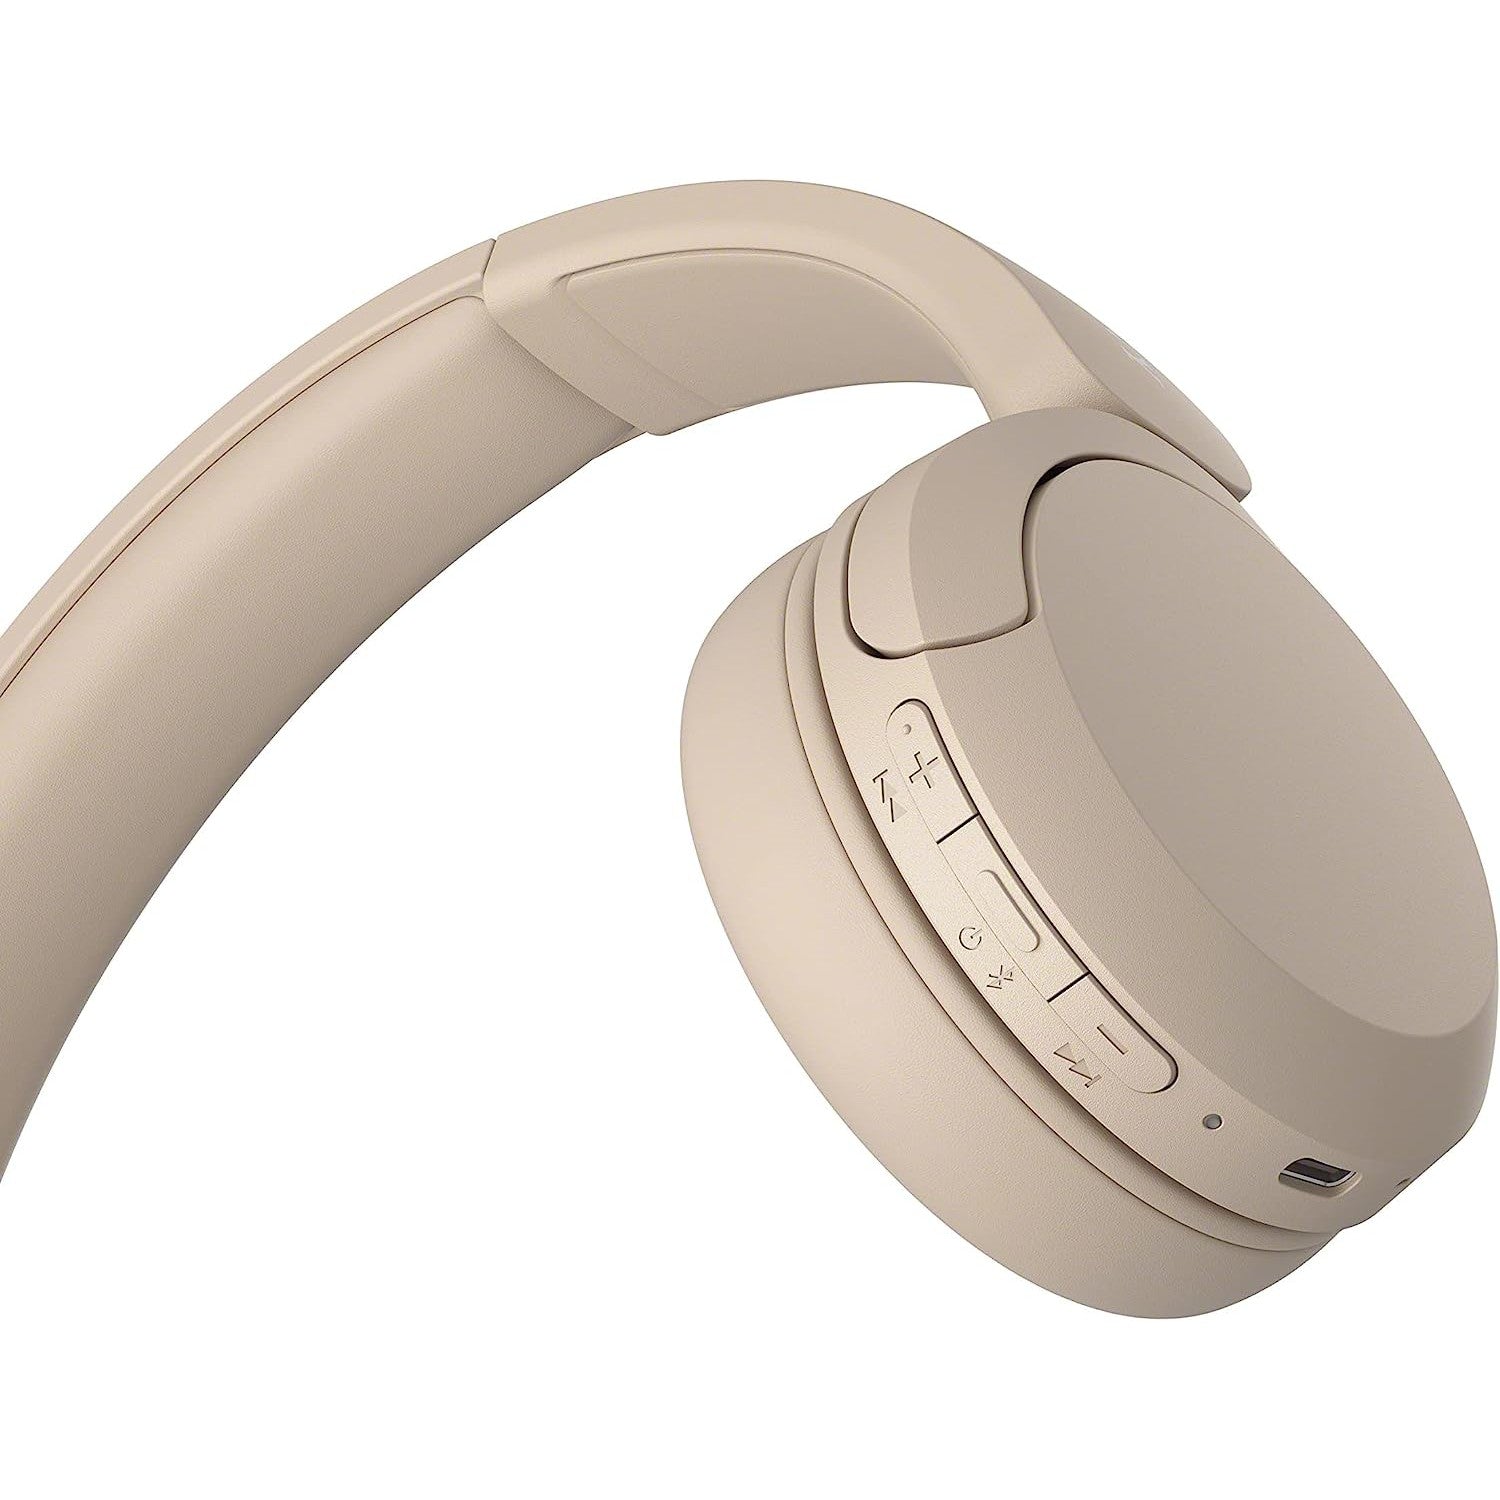 Sony WH-CH520 Wireless Bluetooth Headphones - Refurbished Good